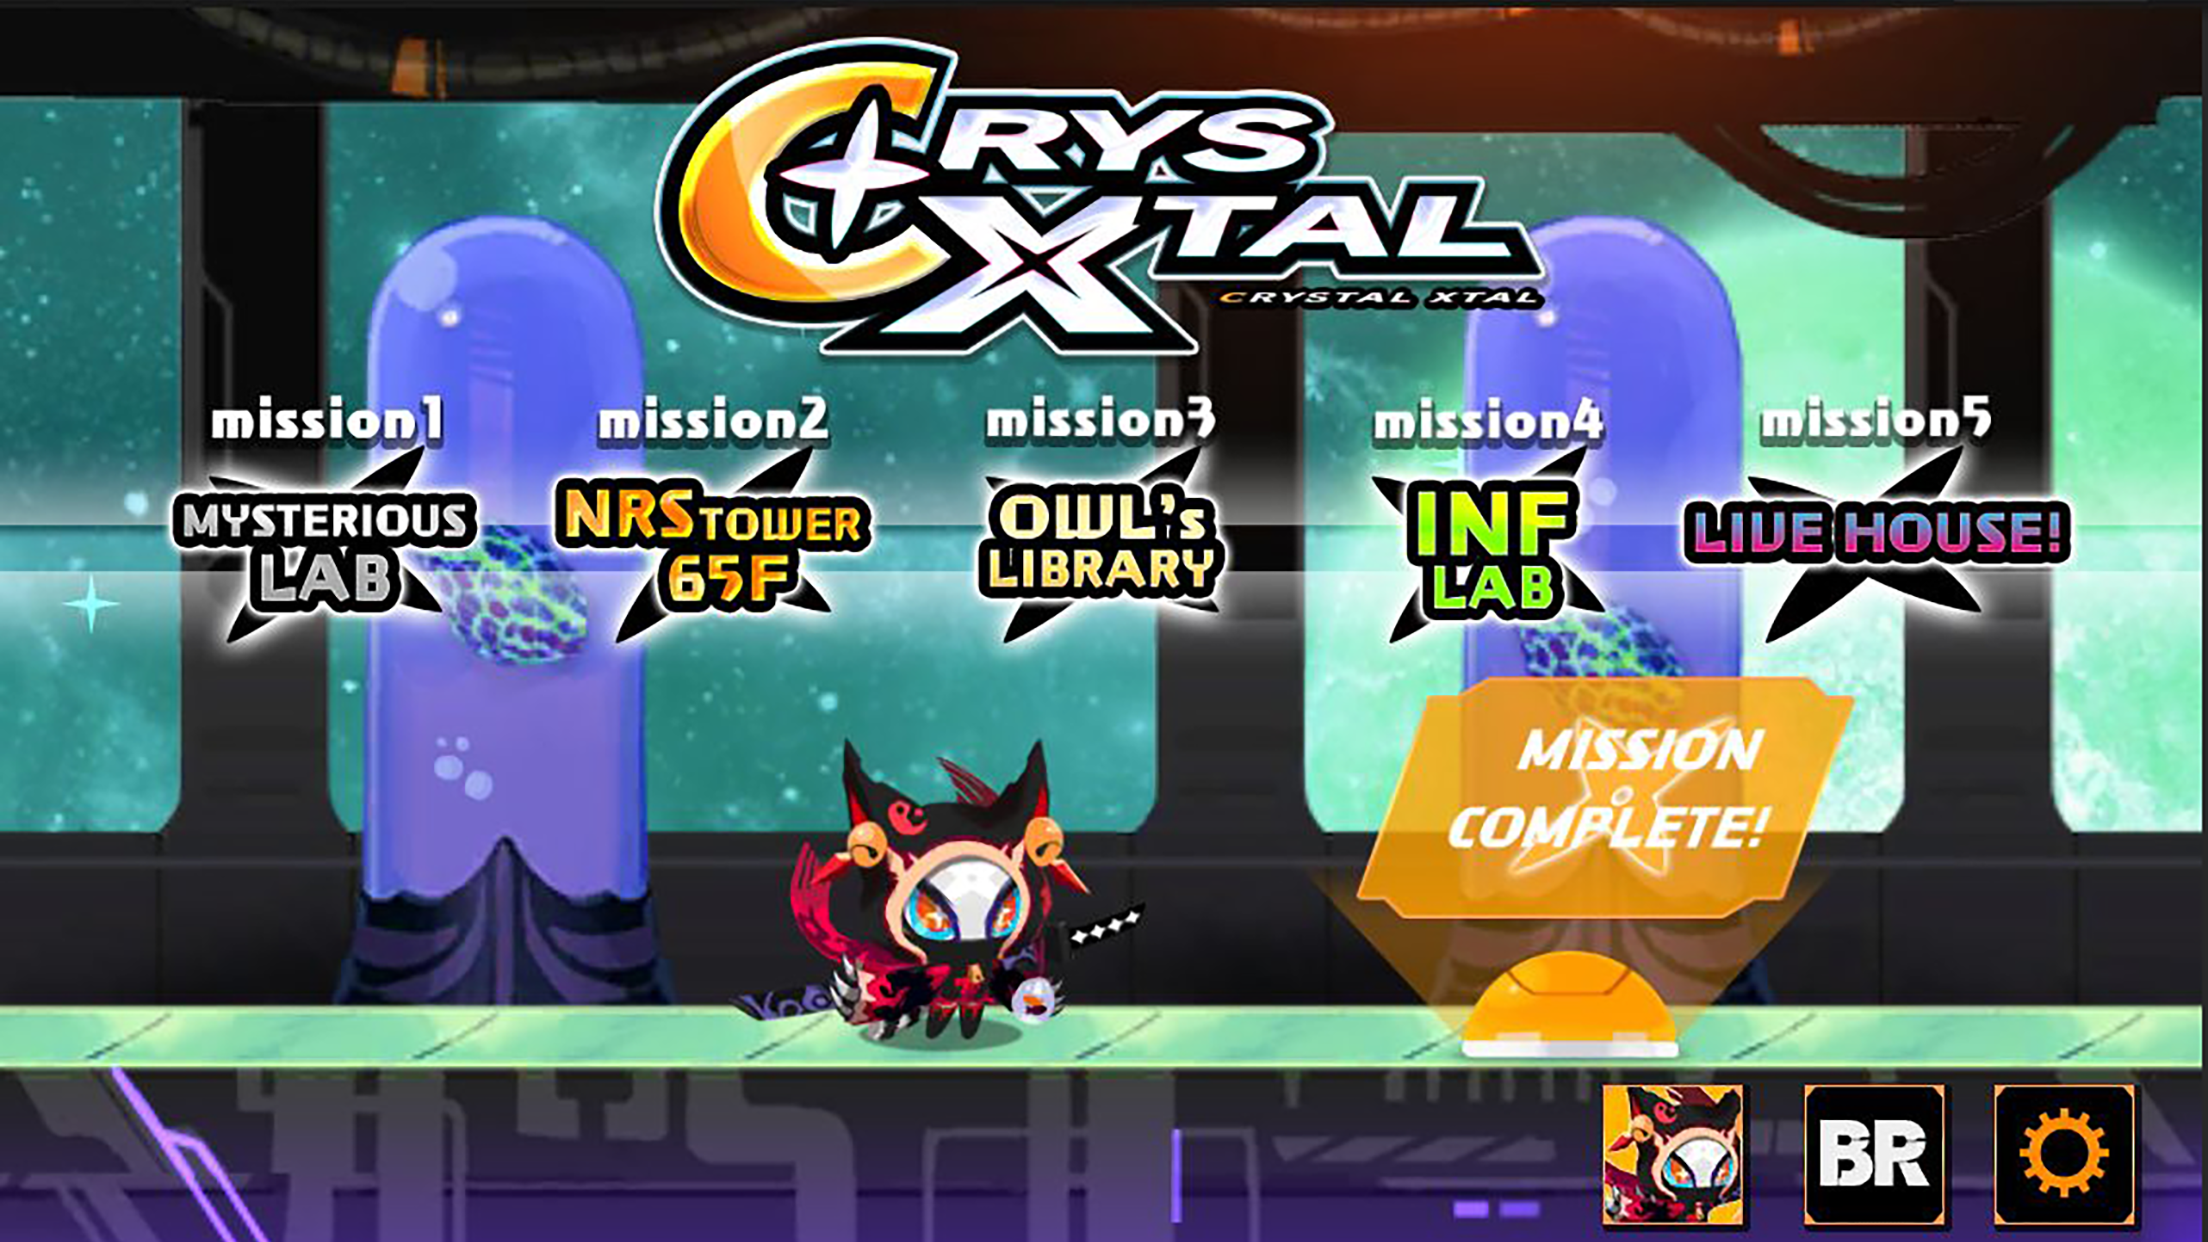 Screenshot 1 of CRYSTAL XTAL - ការបាញ់ប្រហារឆ្មា Ninja 1.3